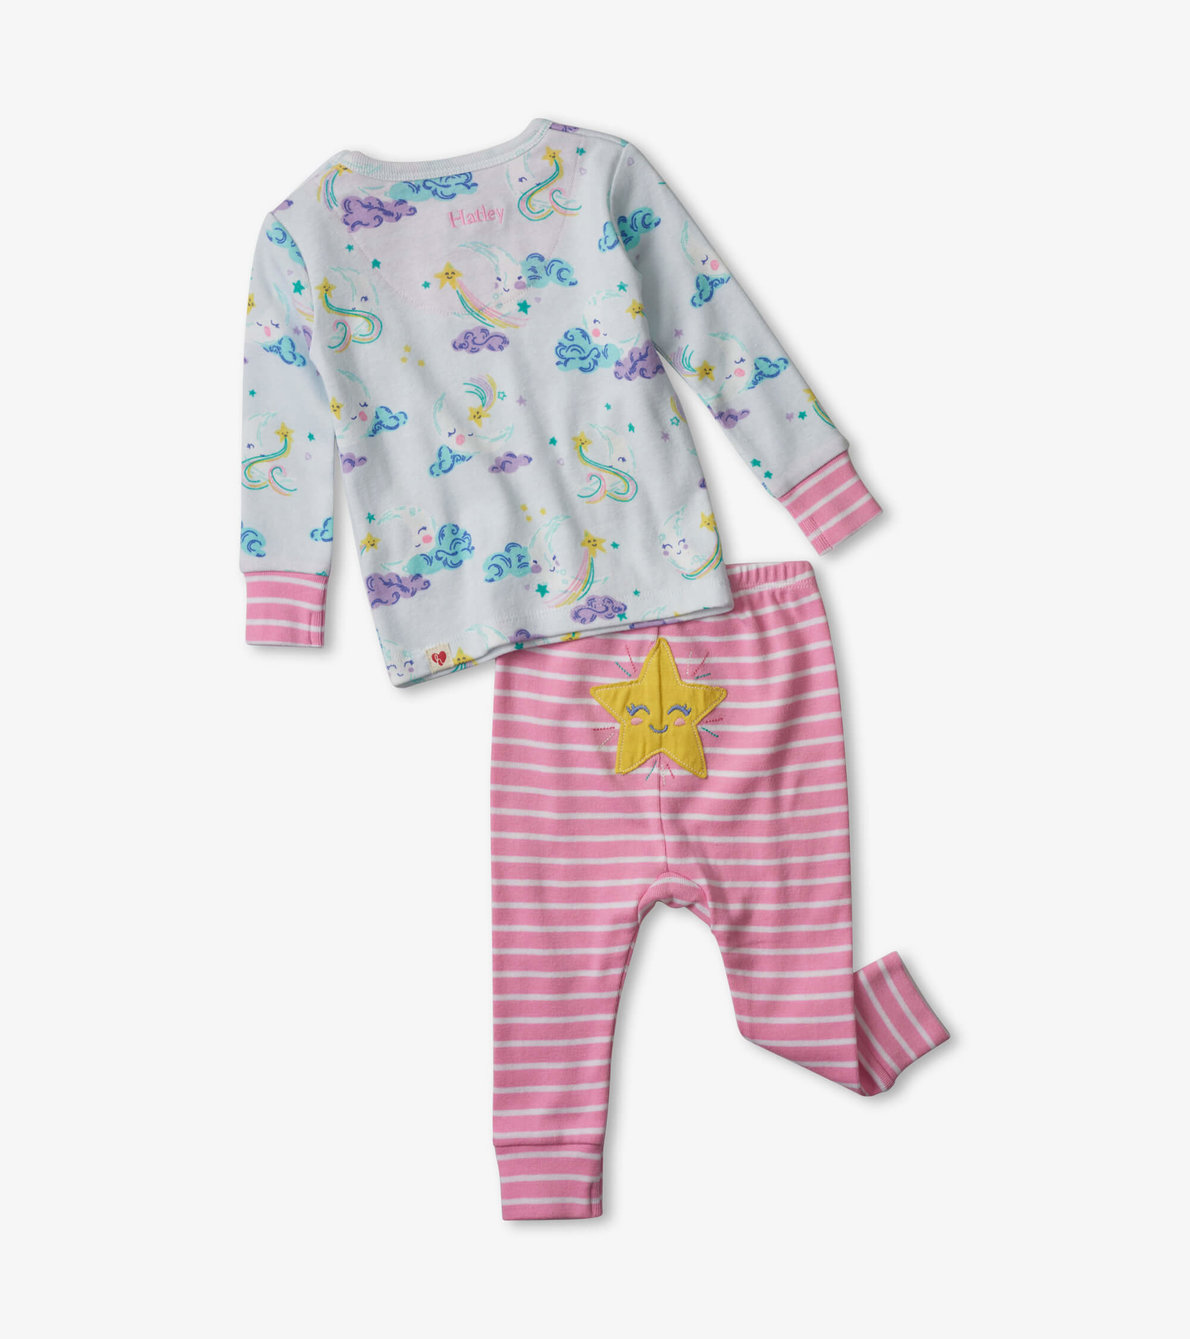 View larger image of Sweet Dreams Organic Cotton Baby Pajama Set